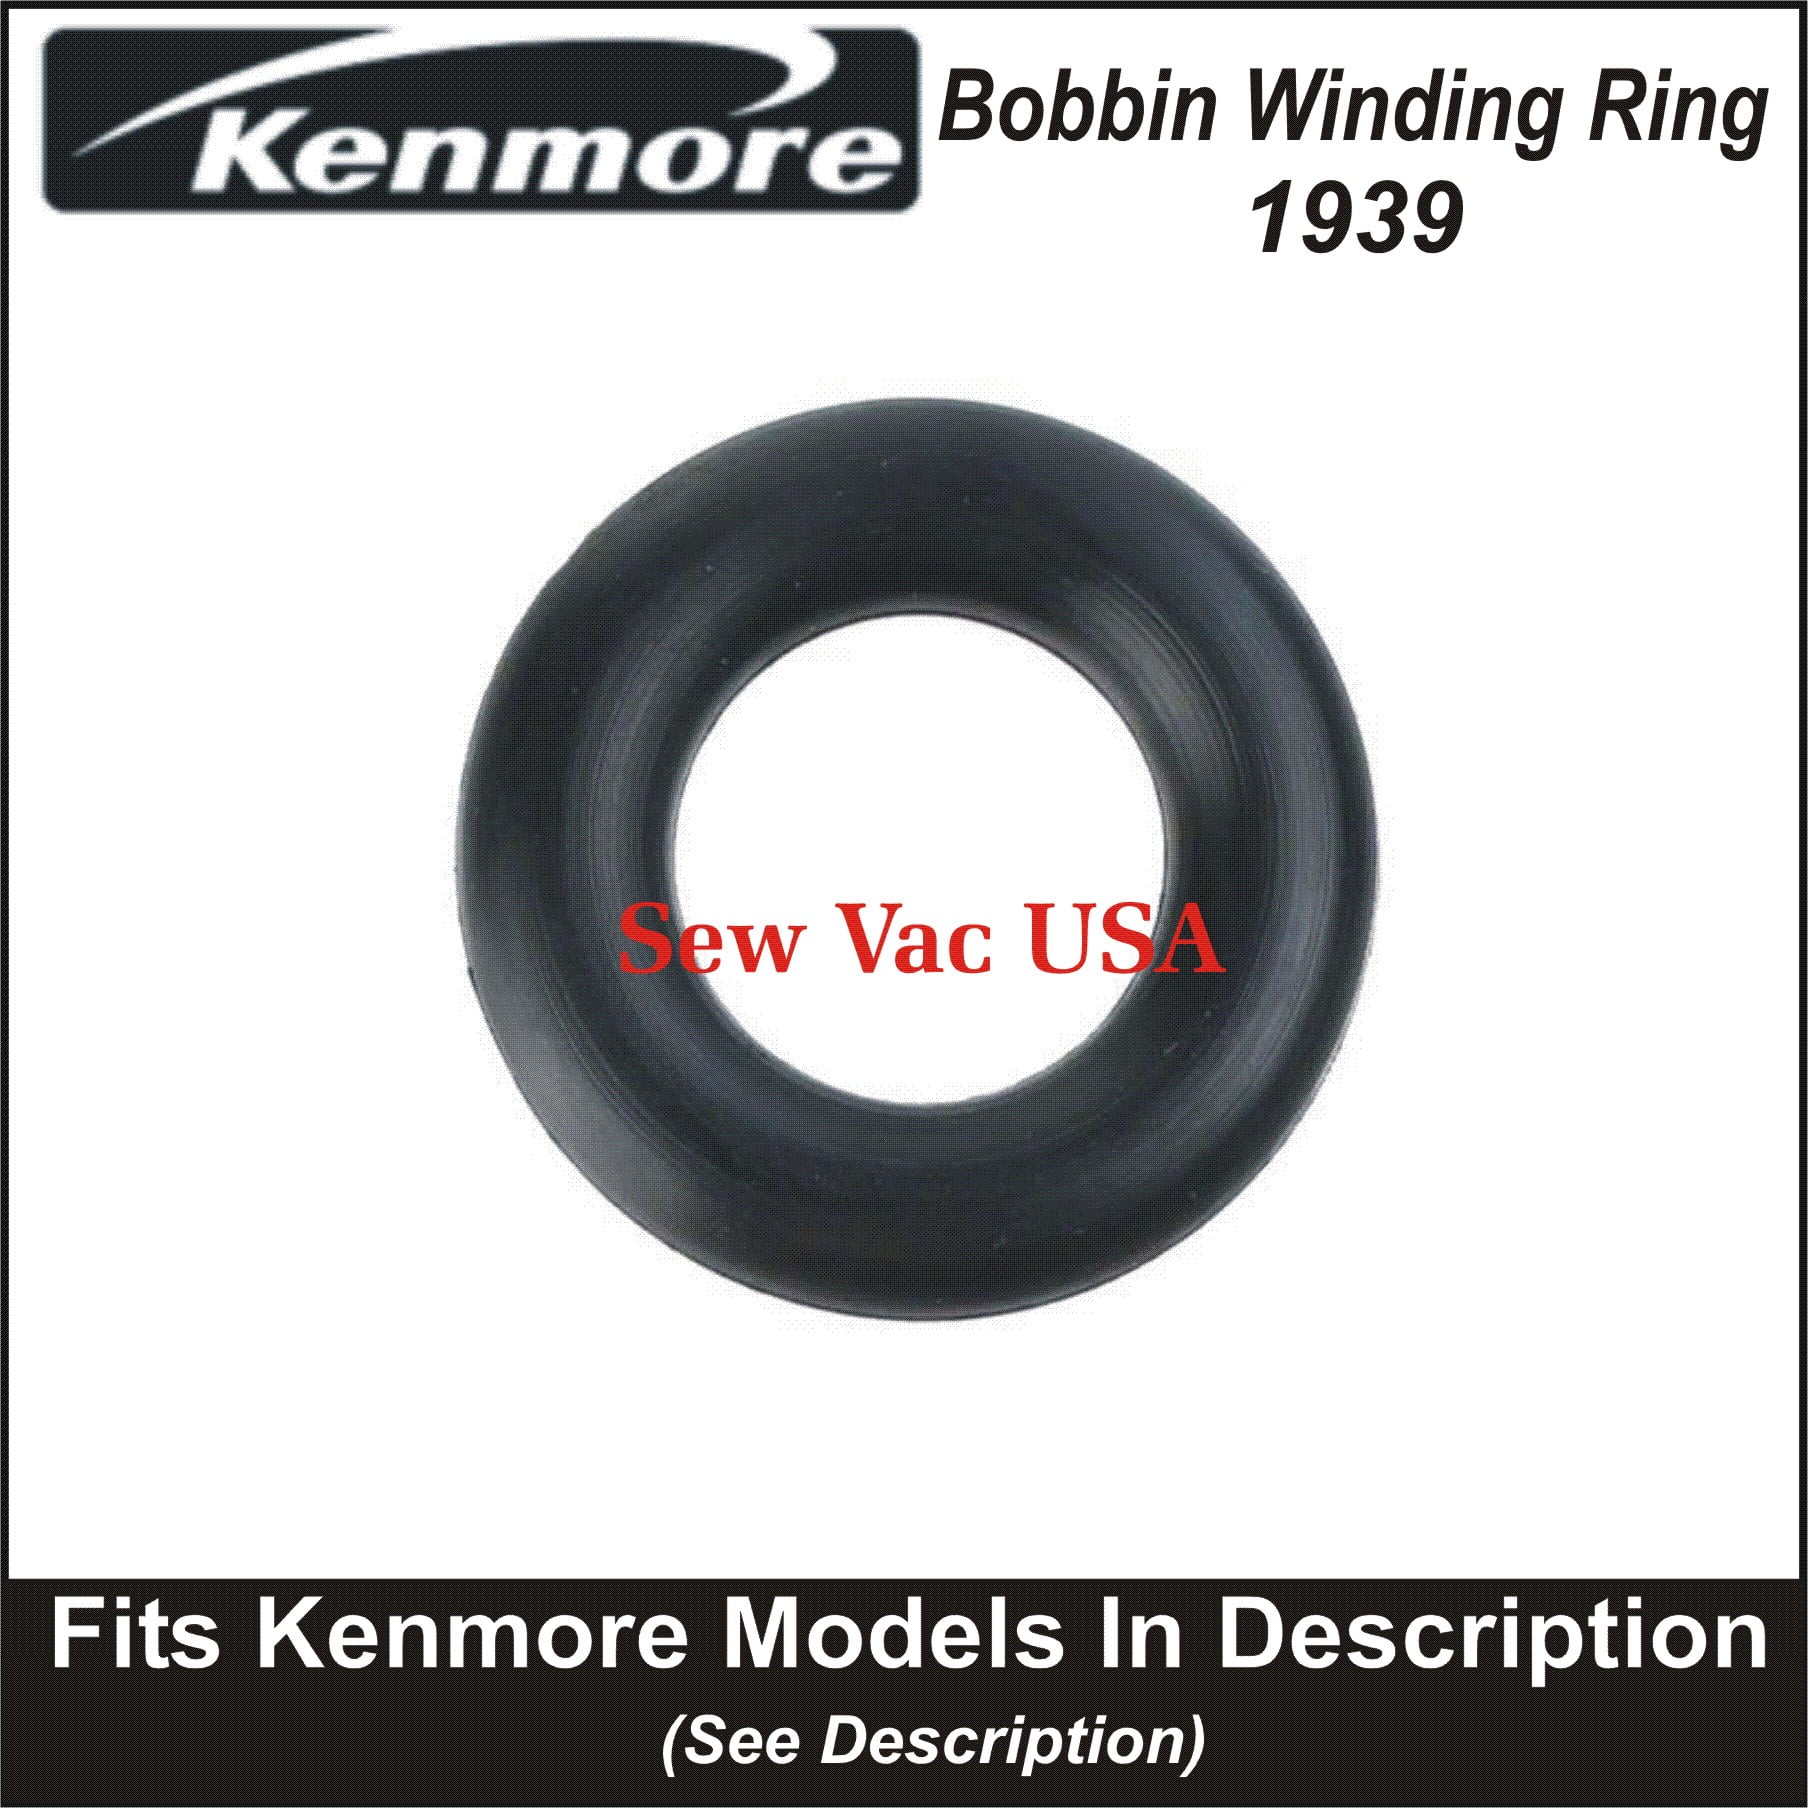 Kenmore Bobbin Winding Ring 1939 Fits Models In Description